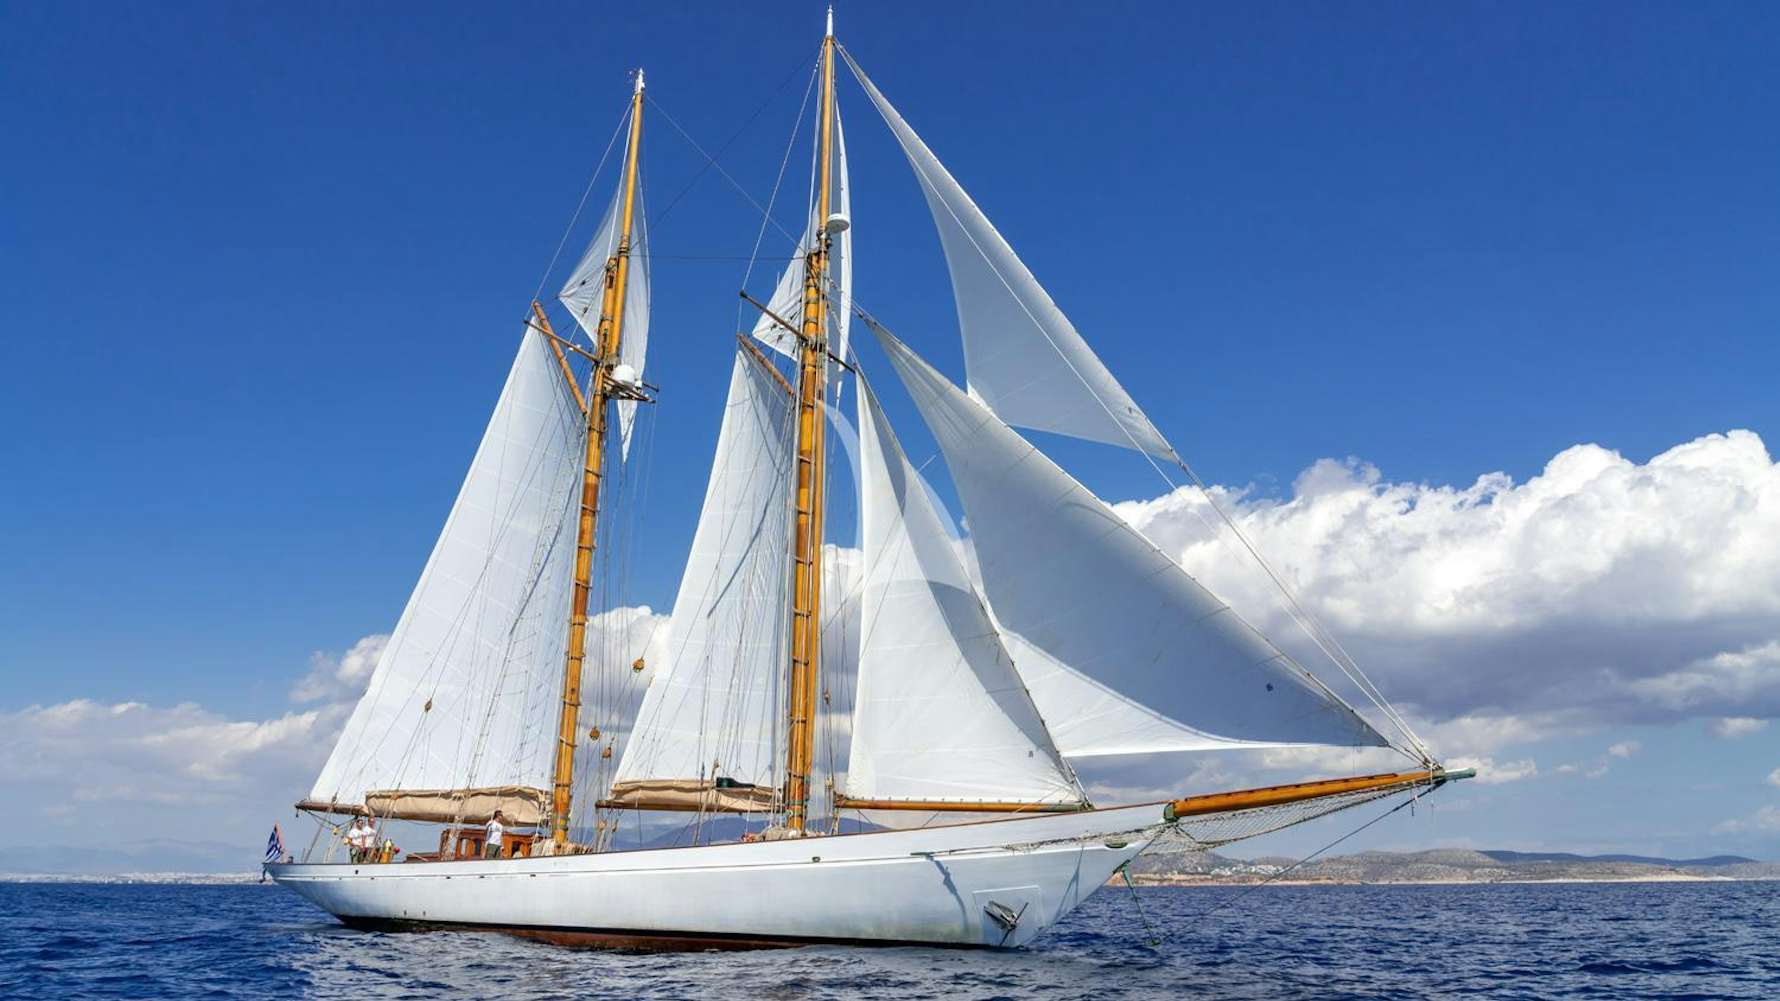 sailing yacht aello